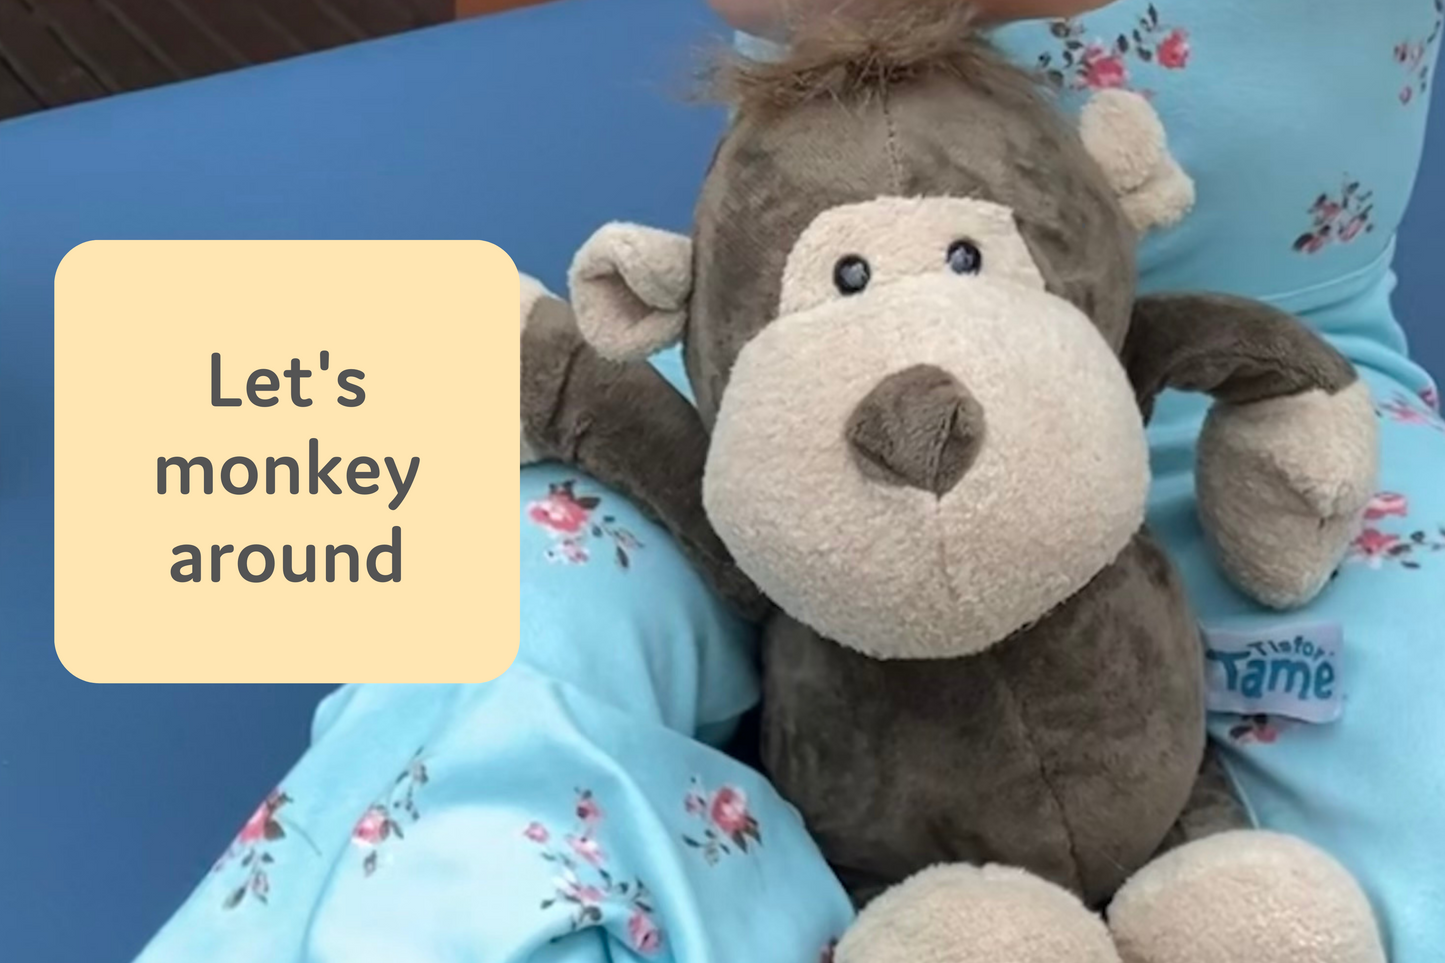 Theo the Stuffed Monkey